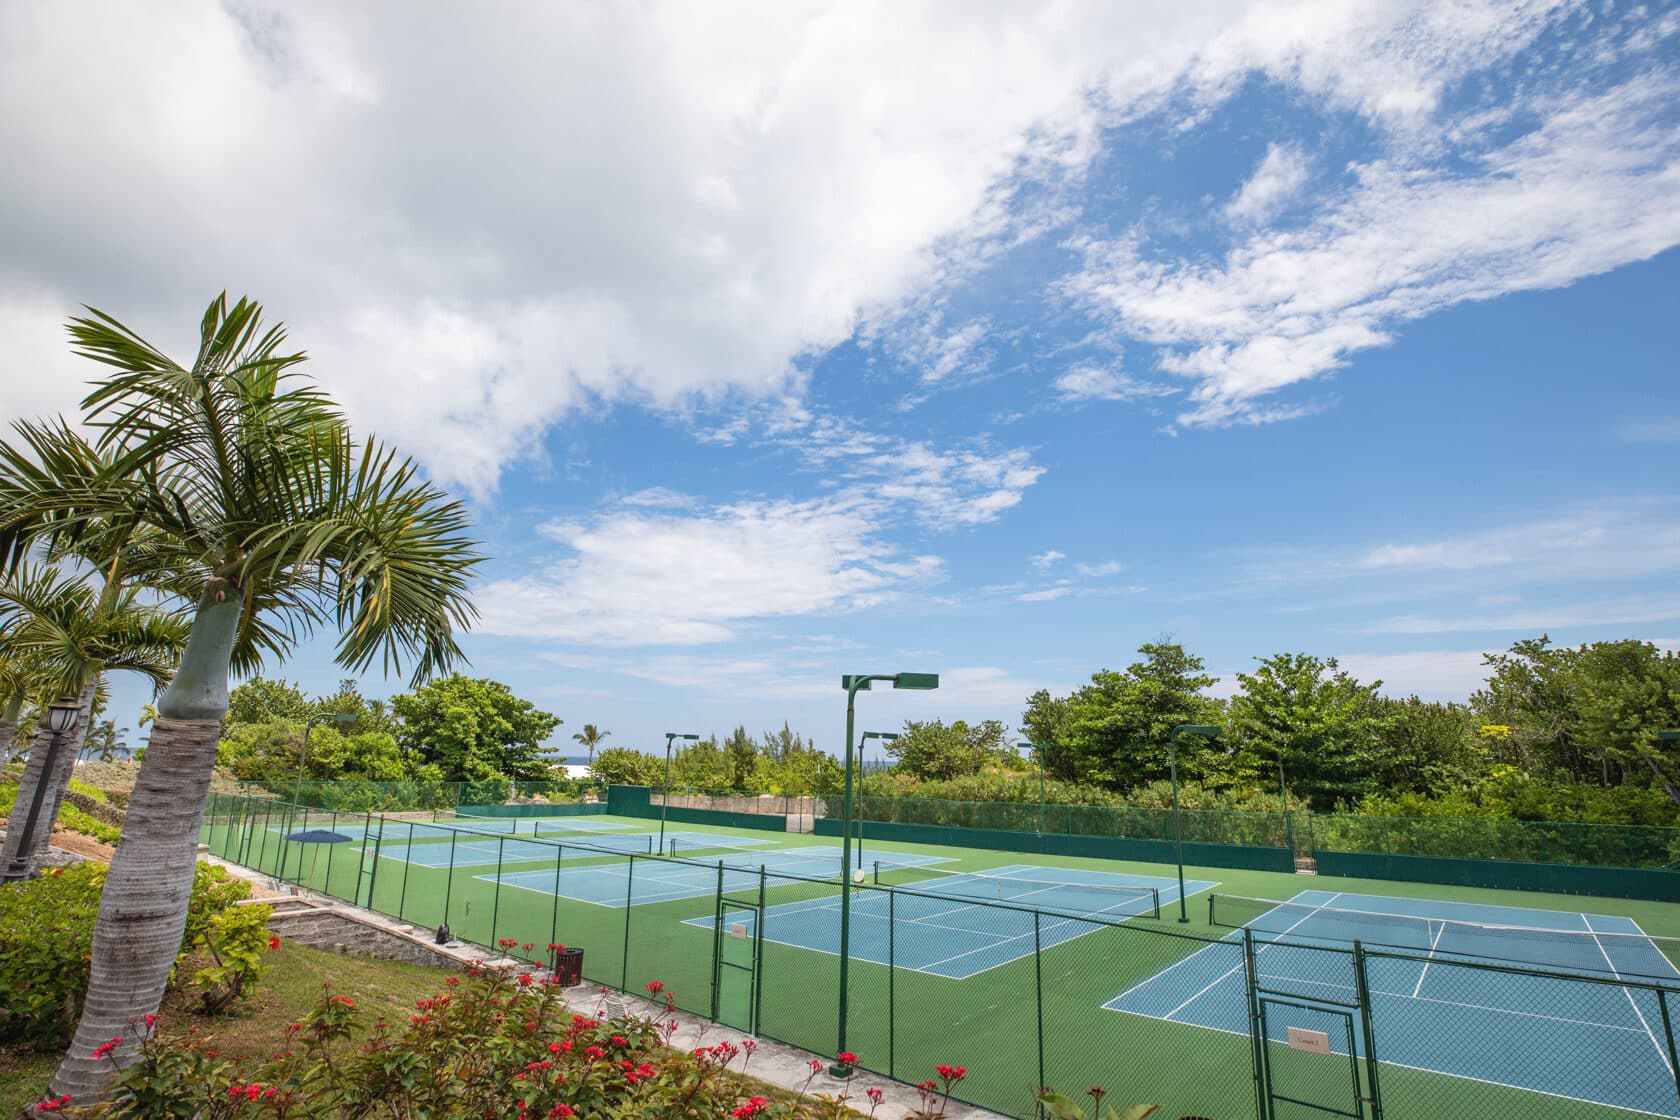 tennis courts in bermuda